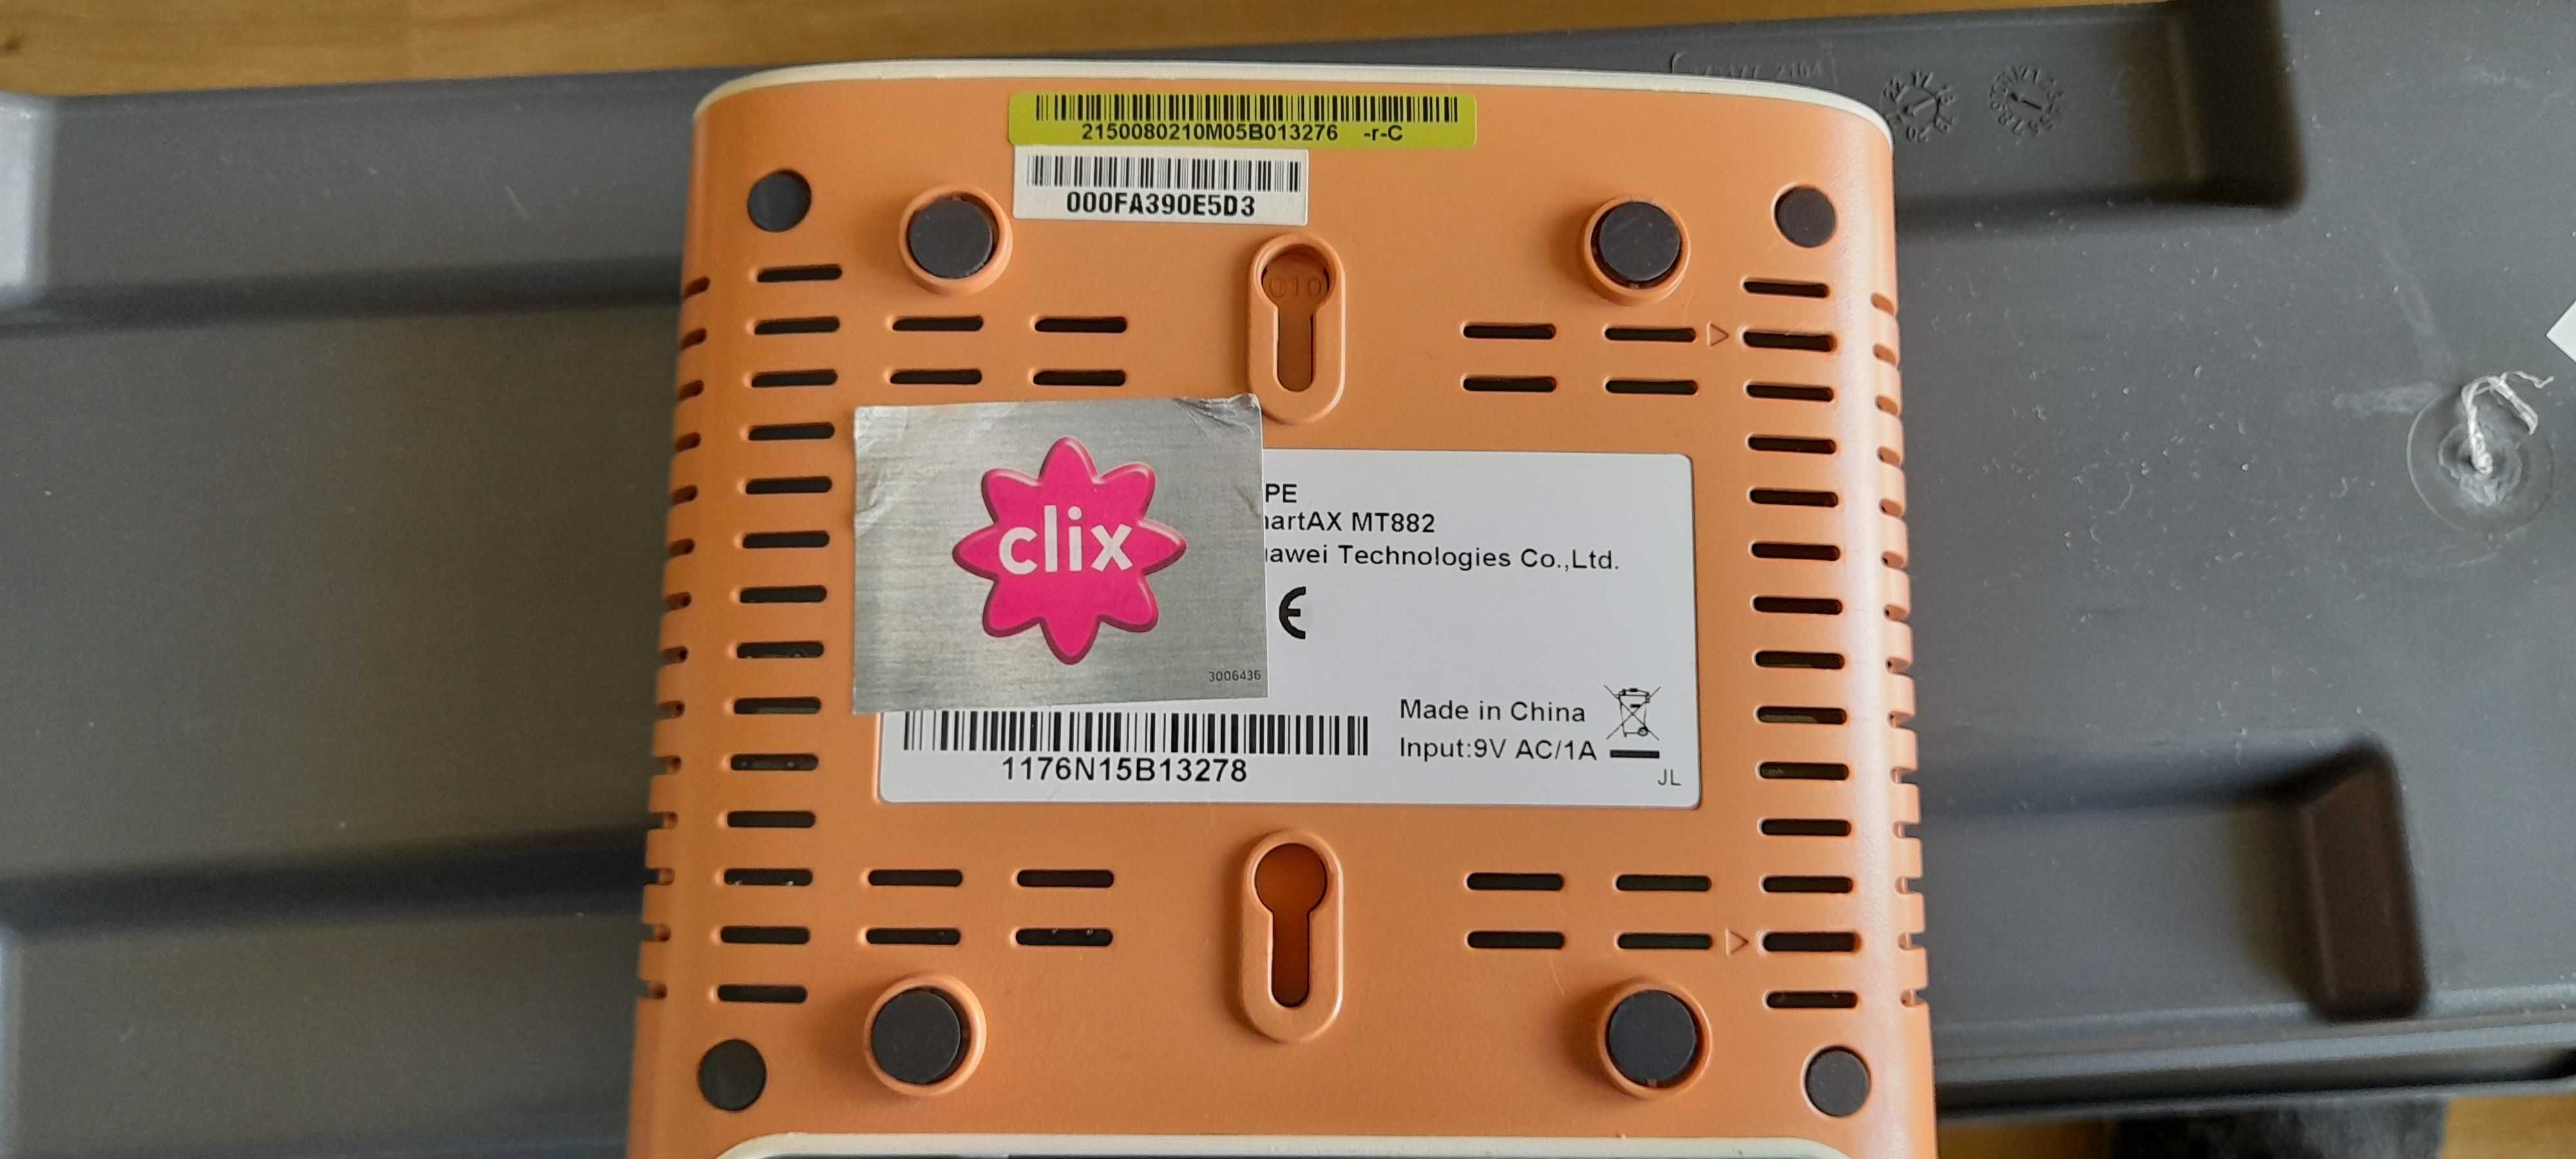 Modem ADSL Huawei SmartAX MT882